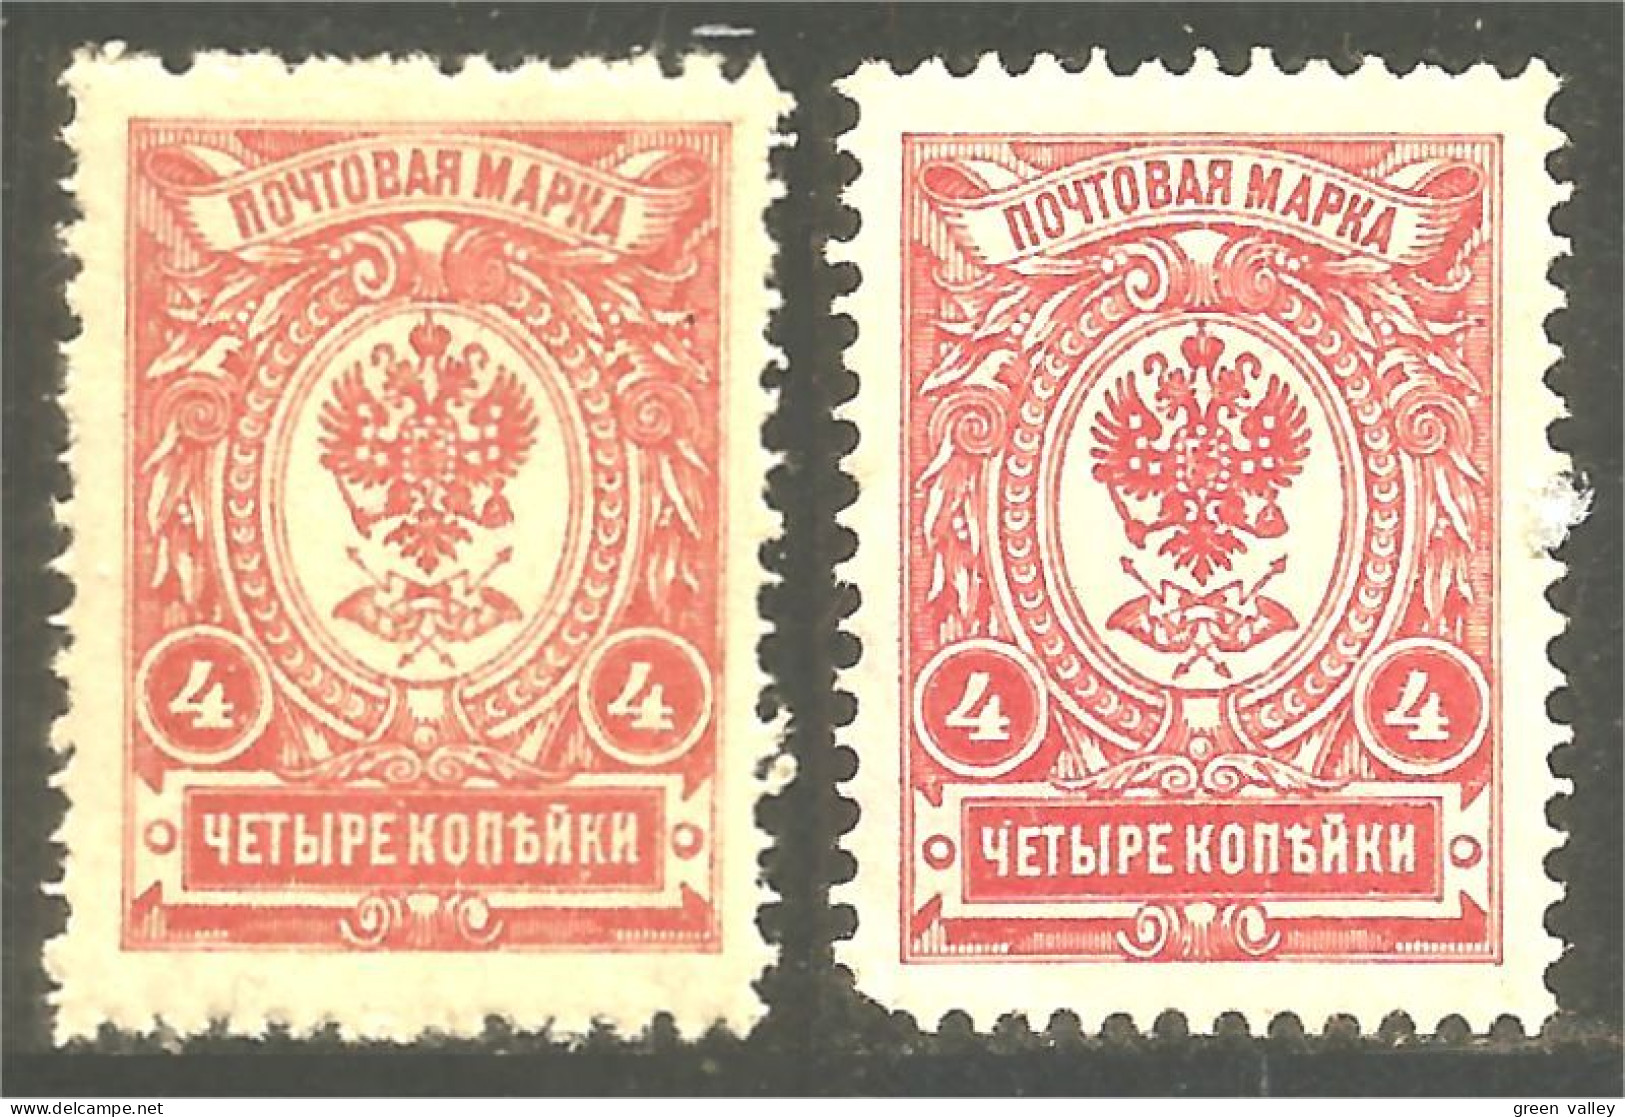 771 Russie 4k 1909 Carmine (mint) Carmine-rose (no Gum) Aigle Imperial Eagle Post Horn Cor Postal Varnish (RUZ-355) - Ungebraucht